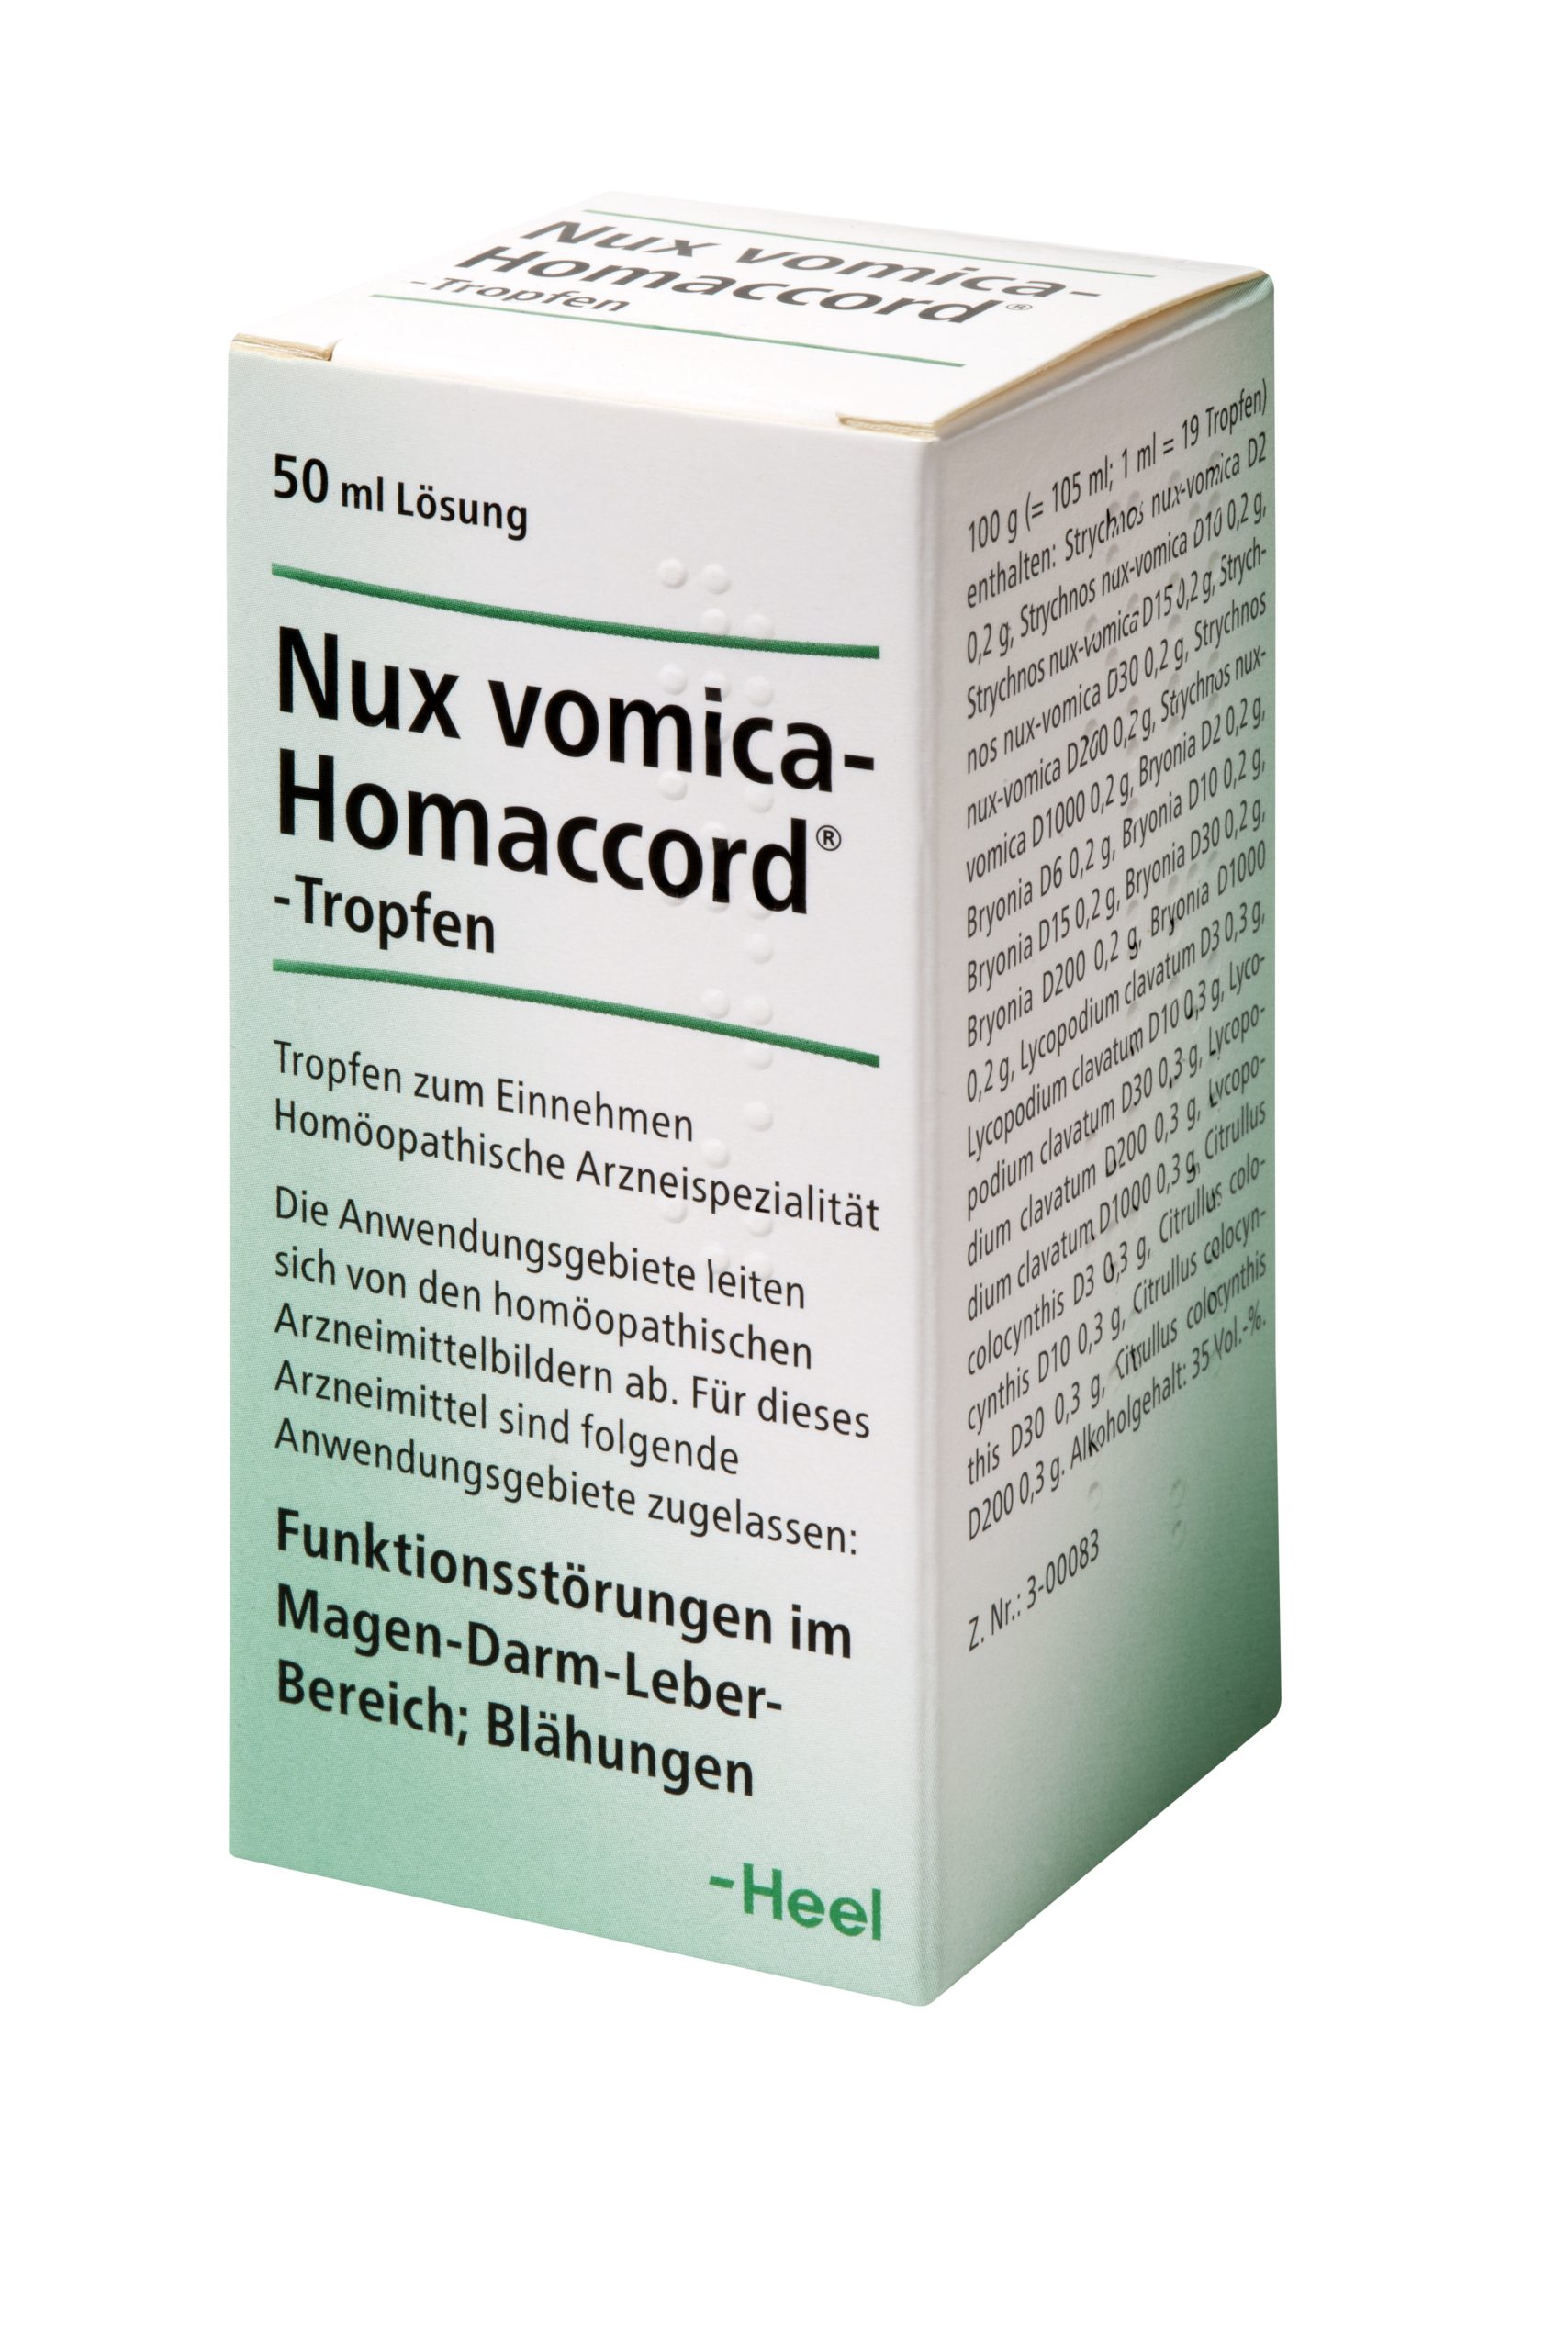 Nux vomica-Homaccord Packshot - © Brigitte Gradwohl